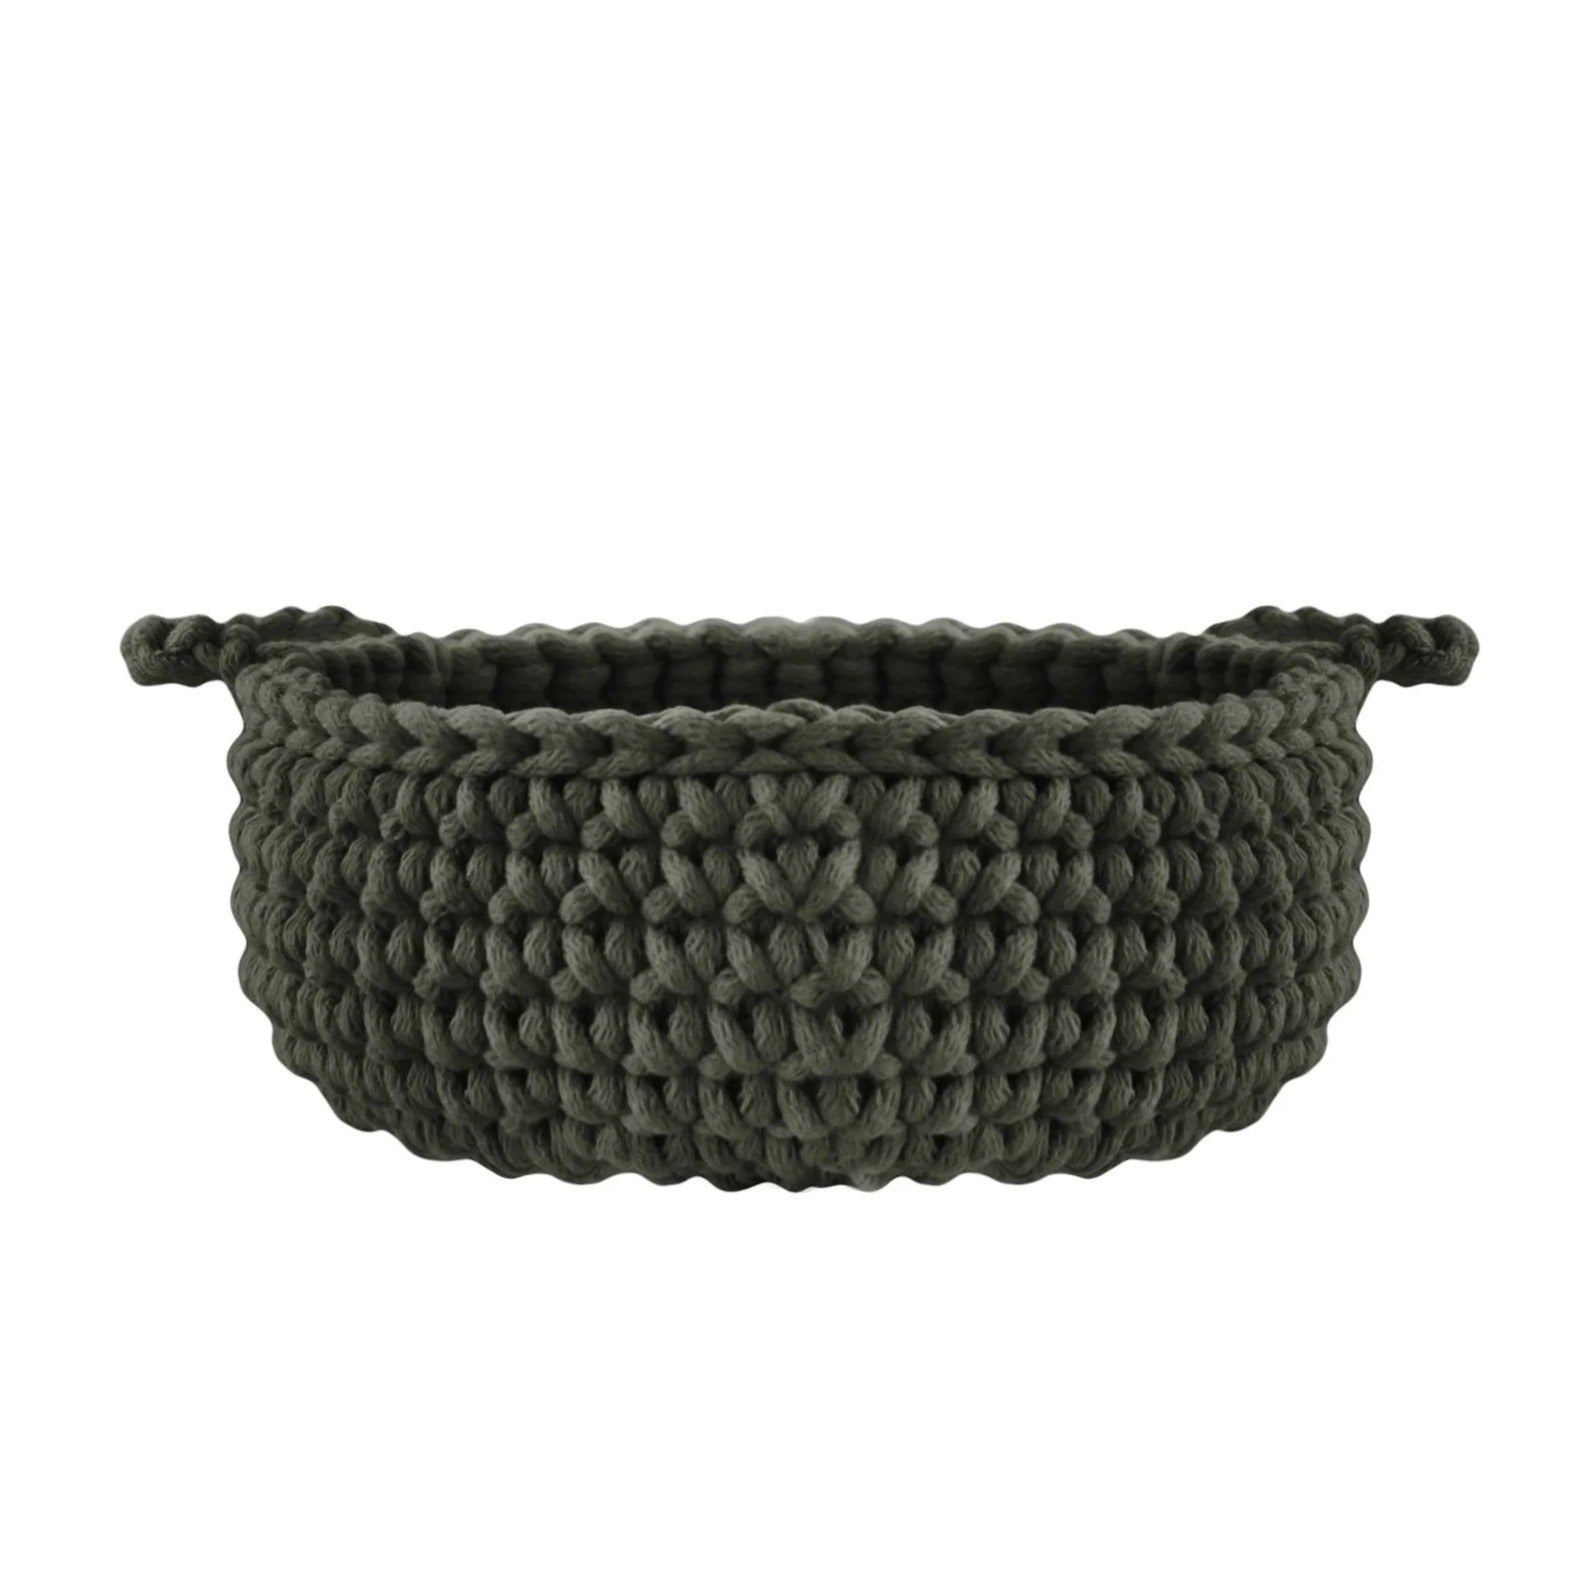 Zuri House Crochet Flat Basket - Small - Olive Green